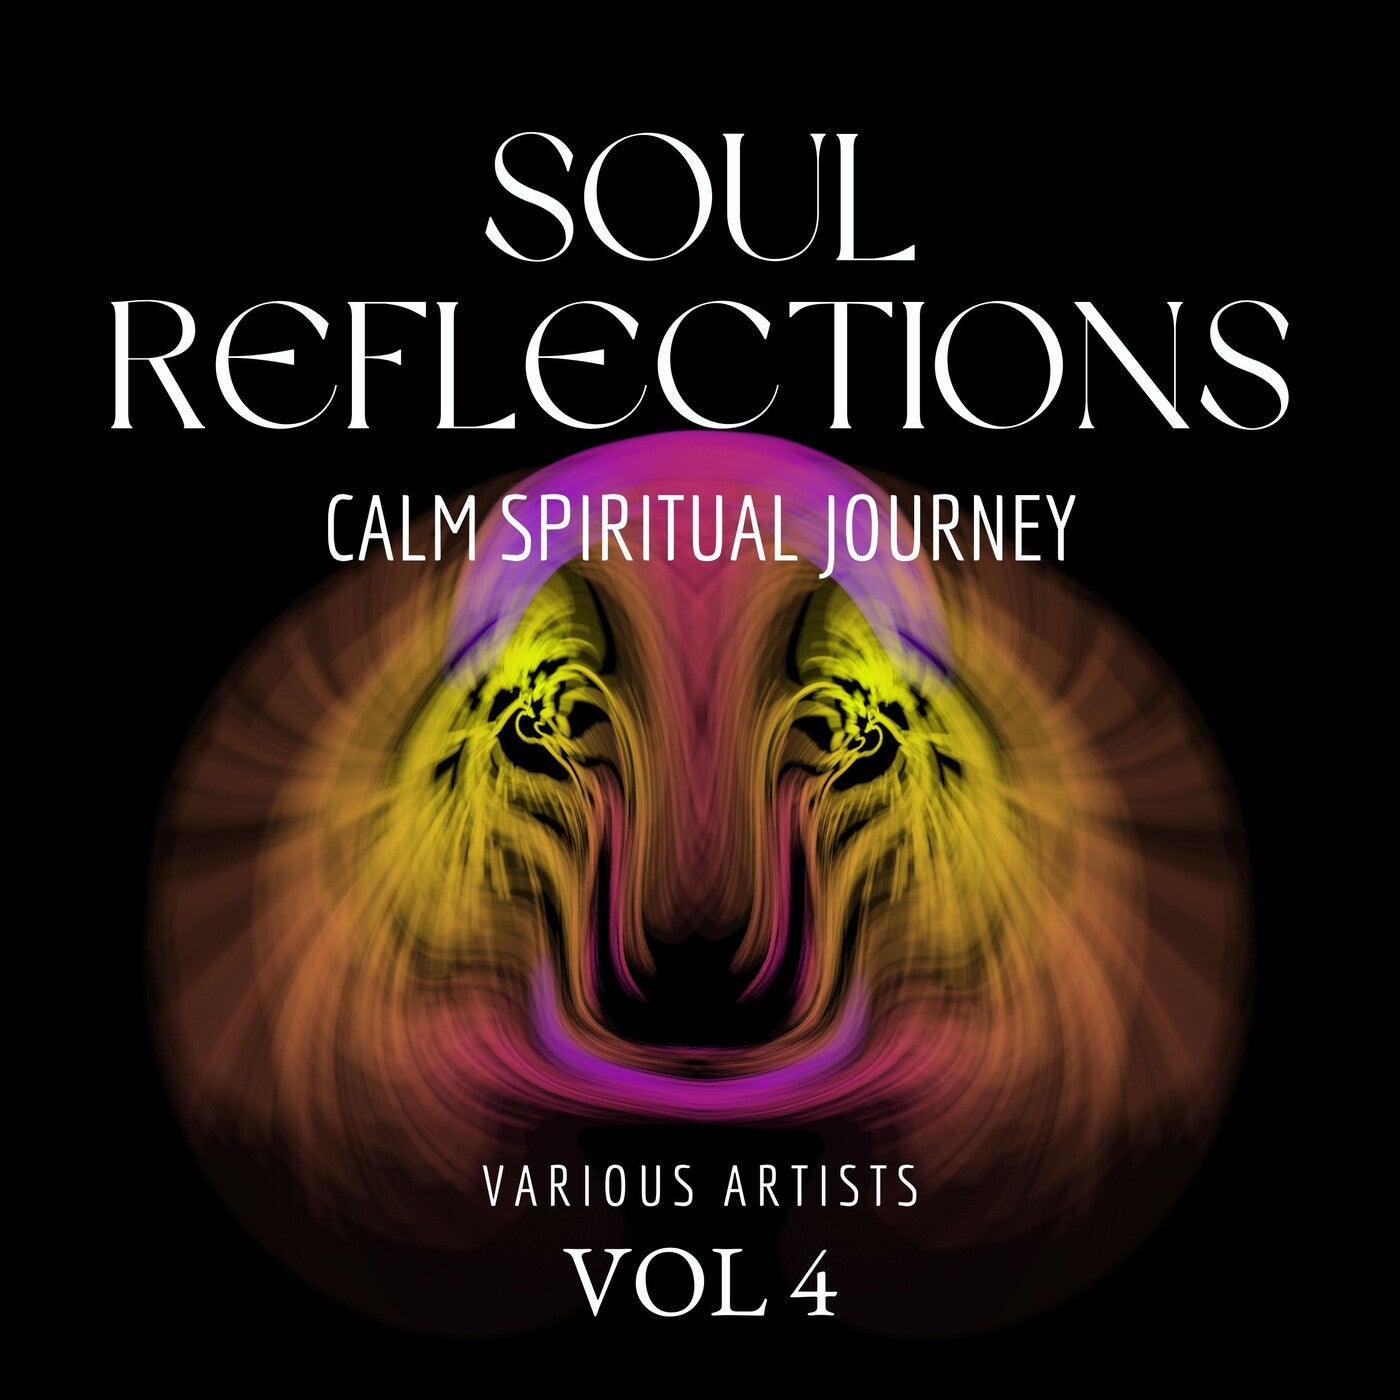 Soul Reflections (Calm Spiritual Journey), Vol. 4